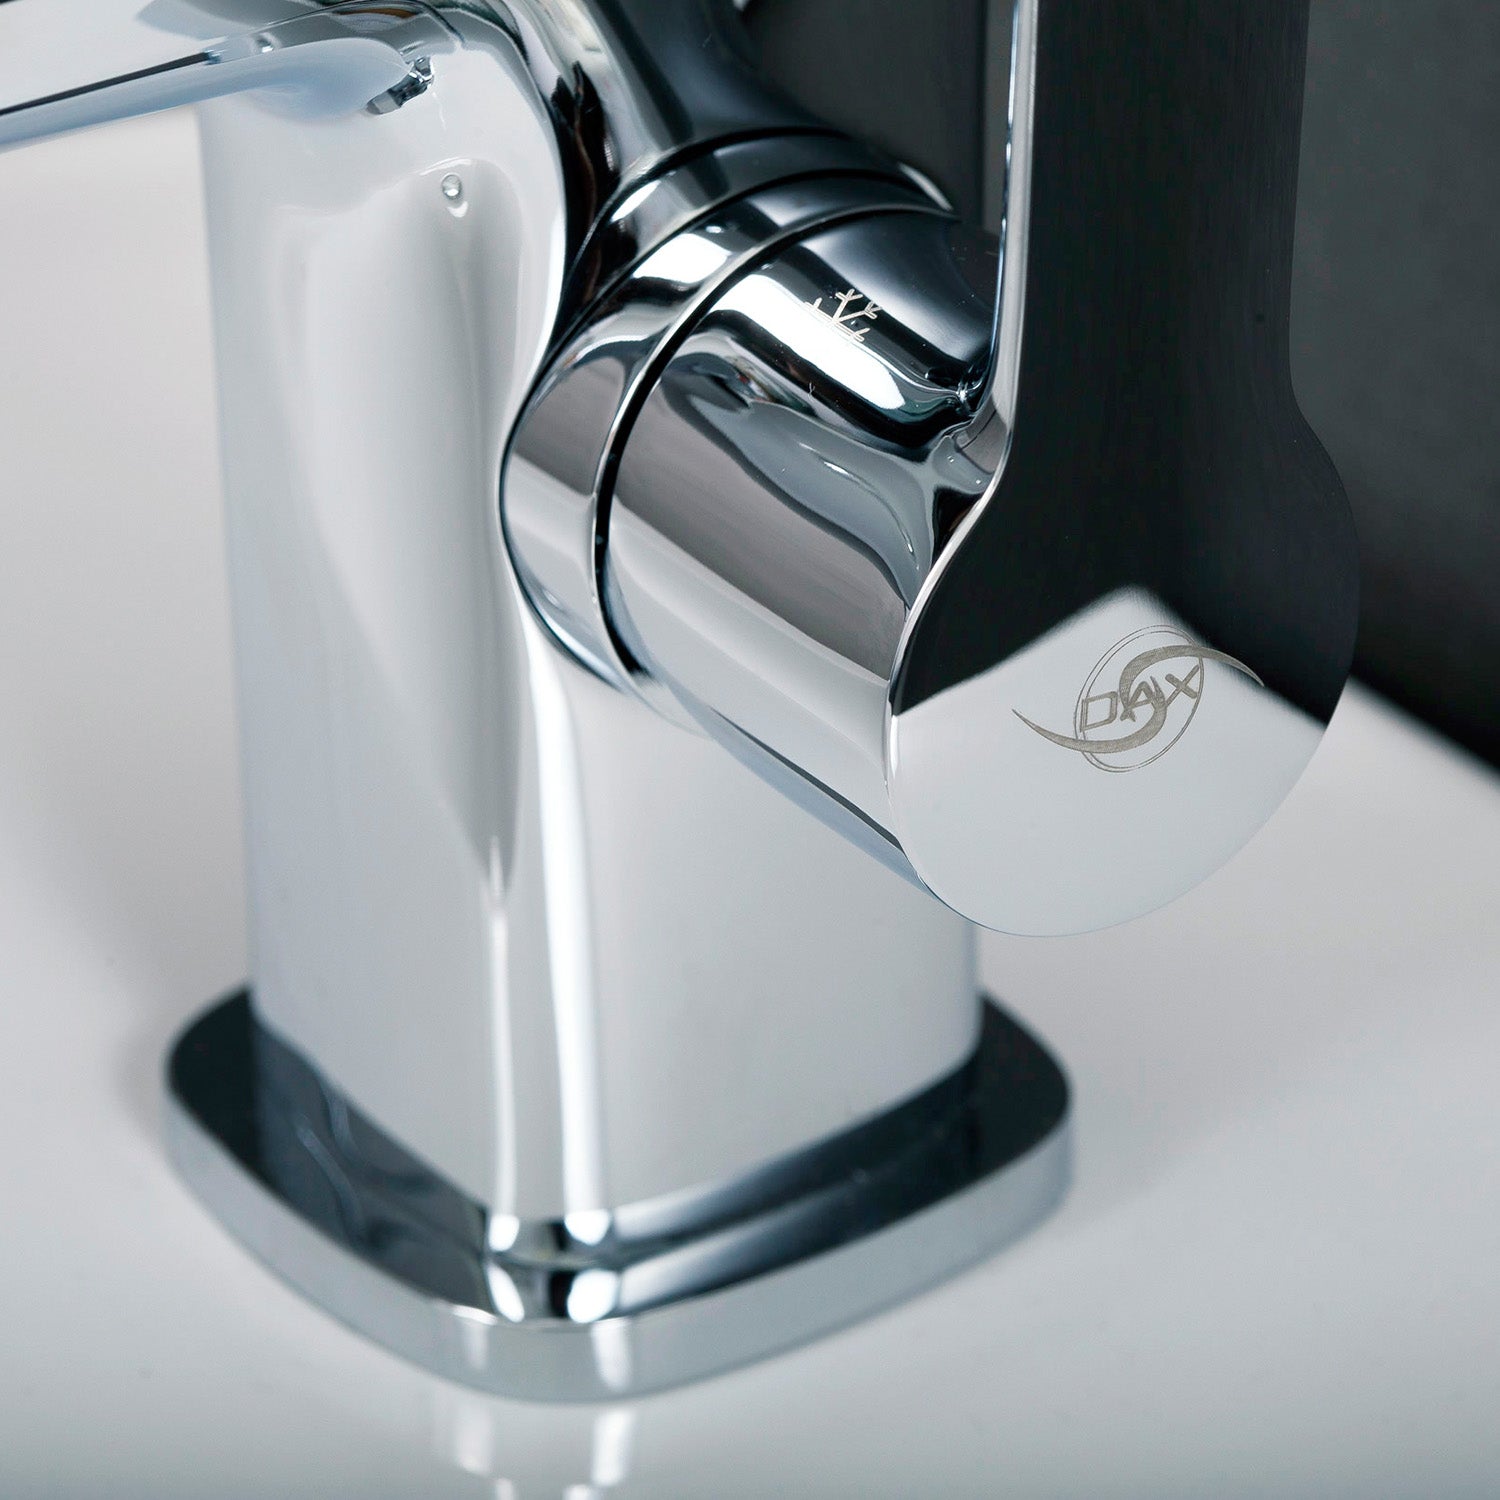 DAX Single Handle Bidet Faucet, Brass Body, Chrome Finish, 4-7/16 x 4-1/4 Inches (DAX-8583-CR)